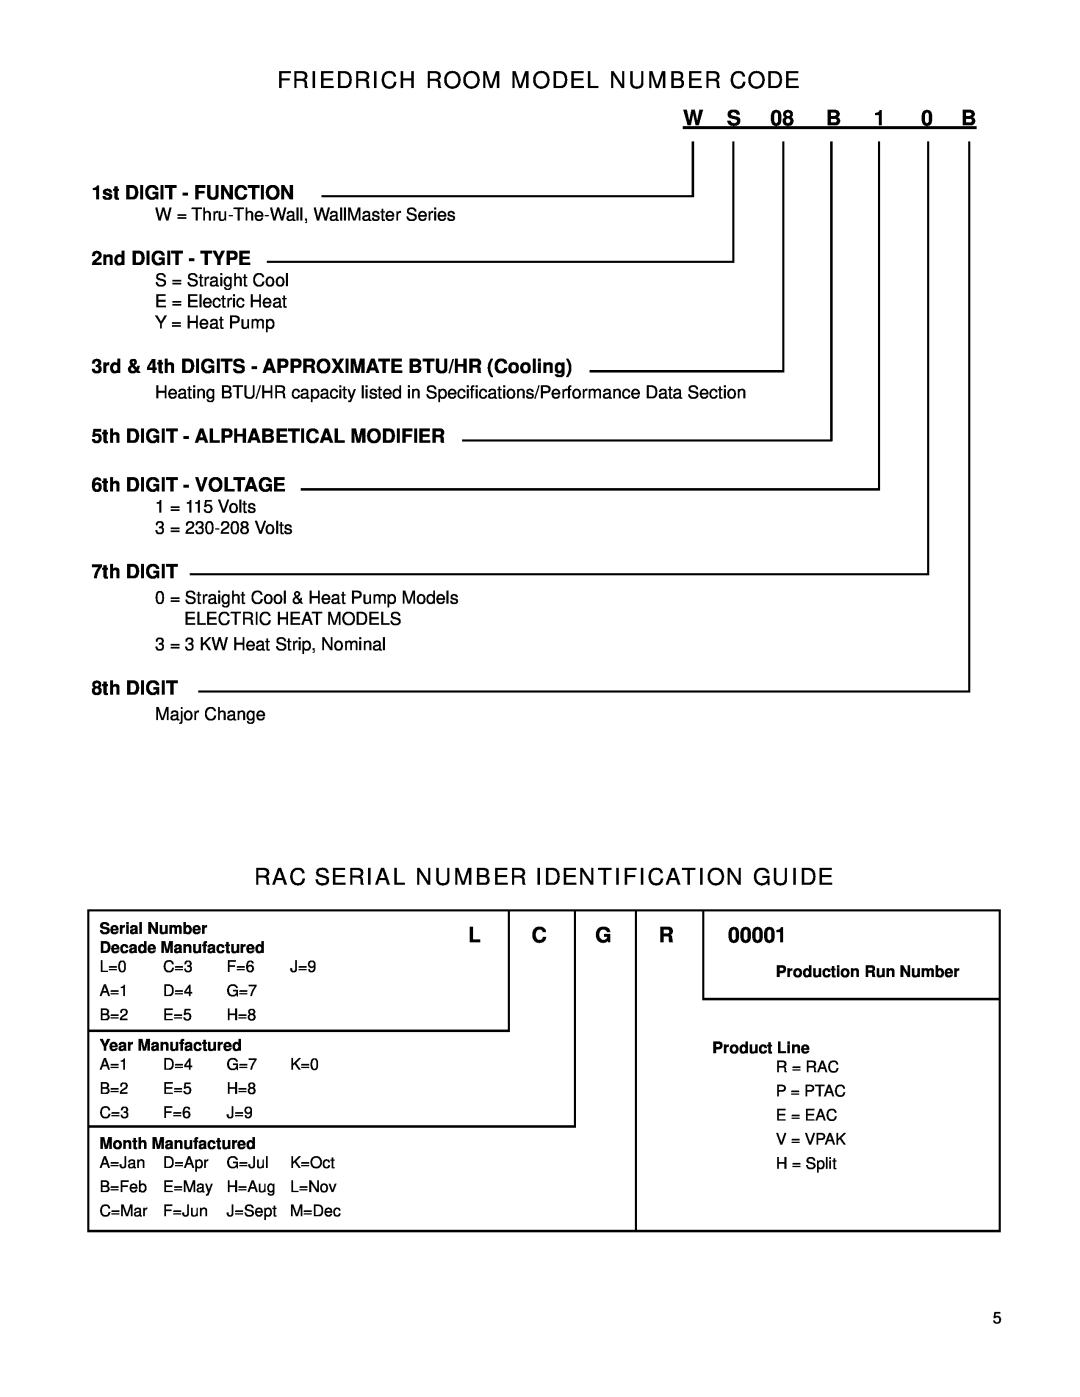 Friedrich WY13B33A-B manual Friedrich Room Model Number Code, Rac Serial Number Identification Guide, W S 08 B 1 0 B, 00001 